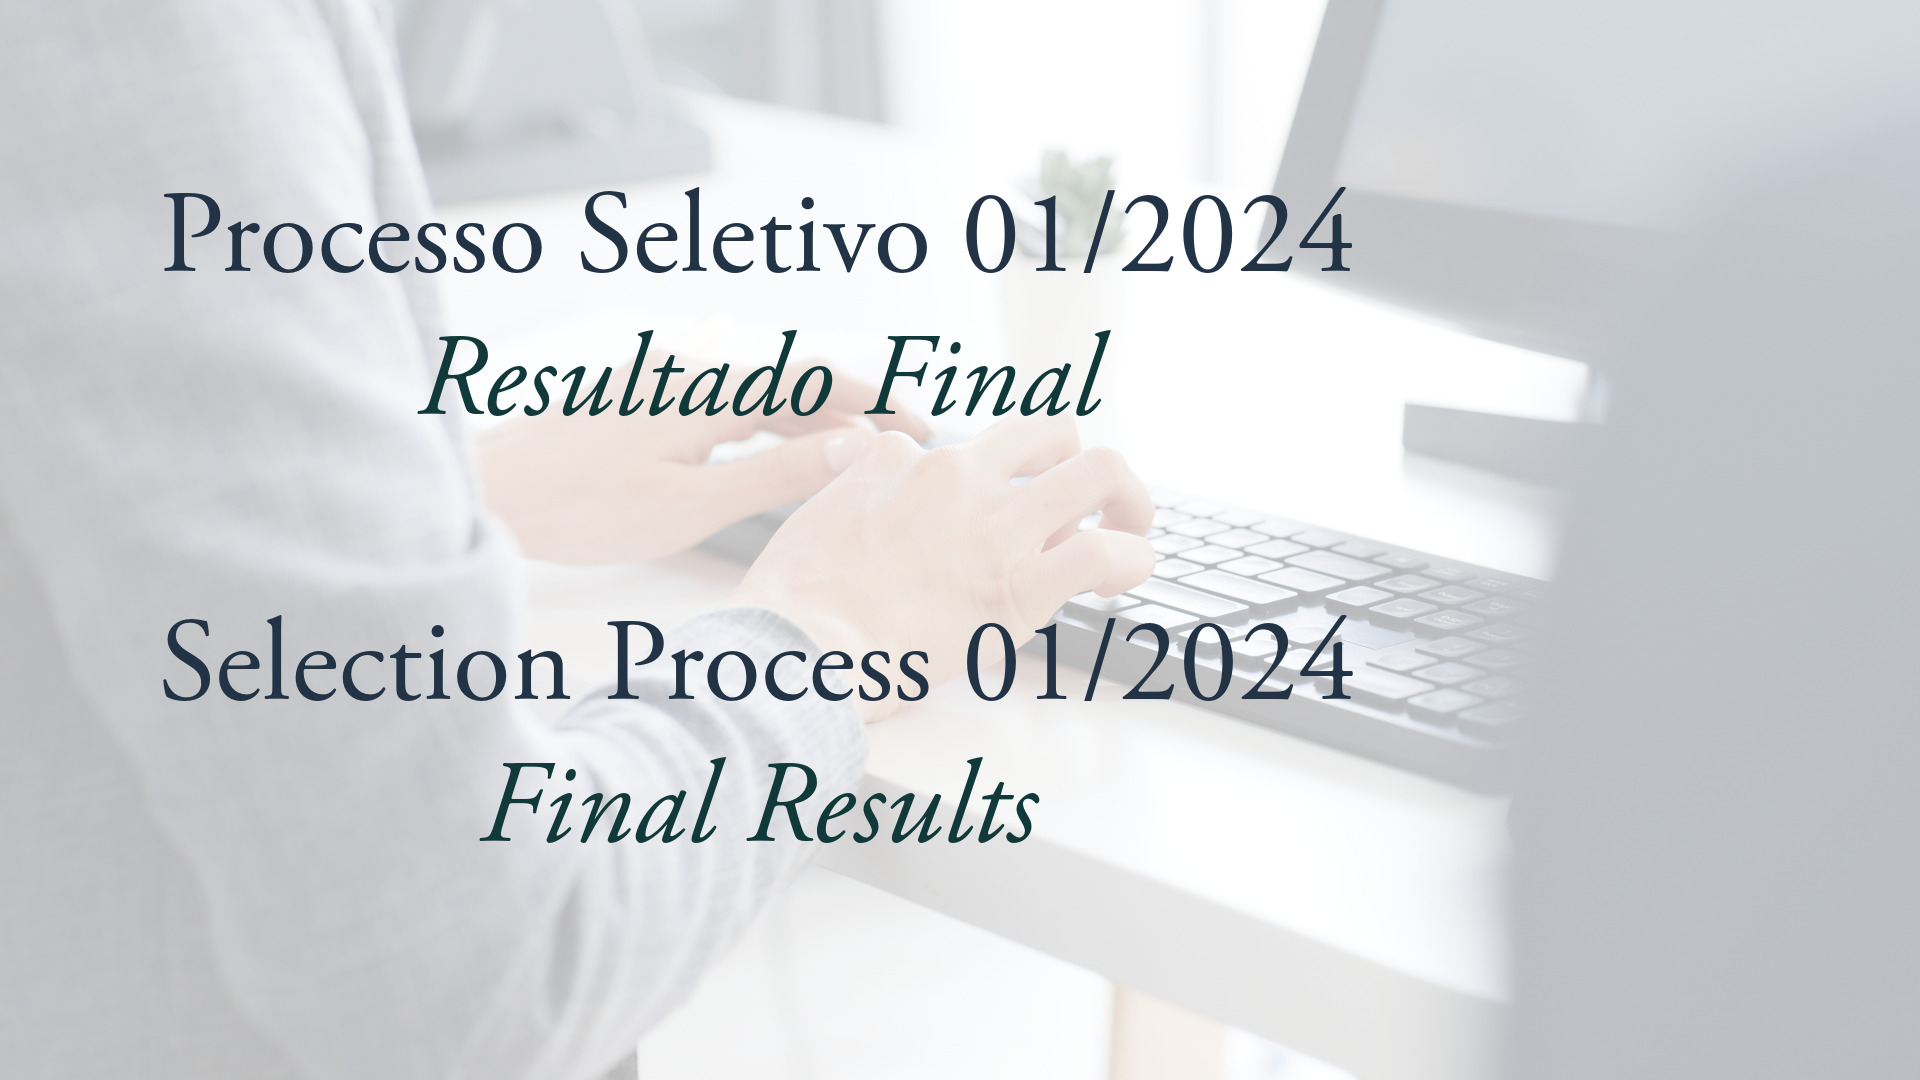 Selection Process 01/2024